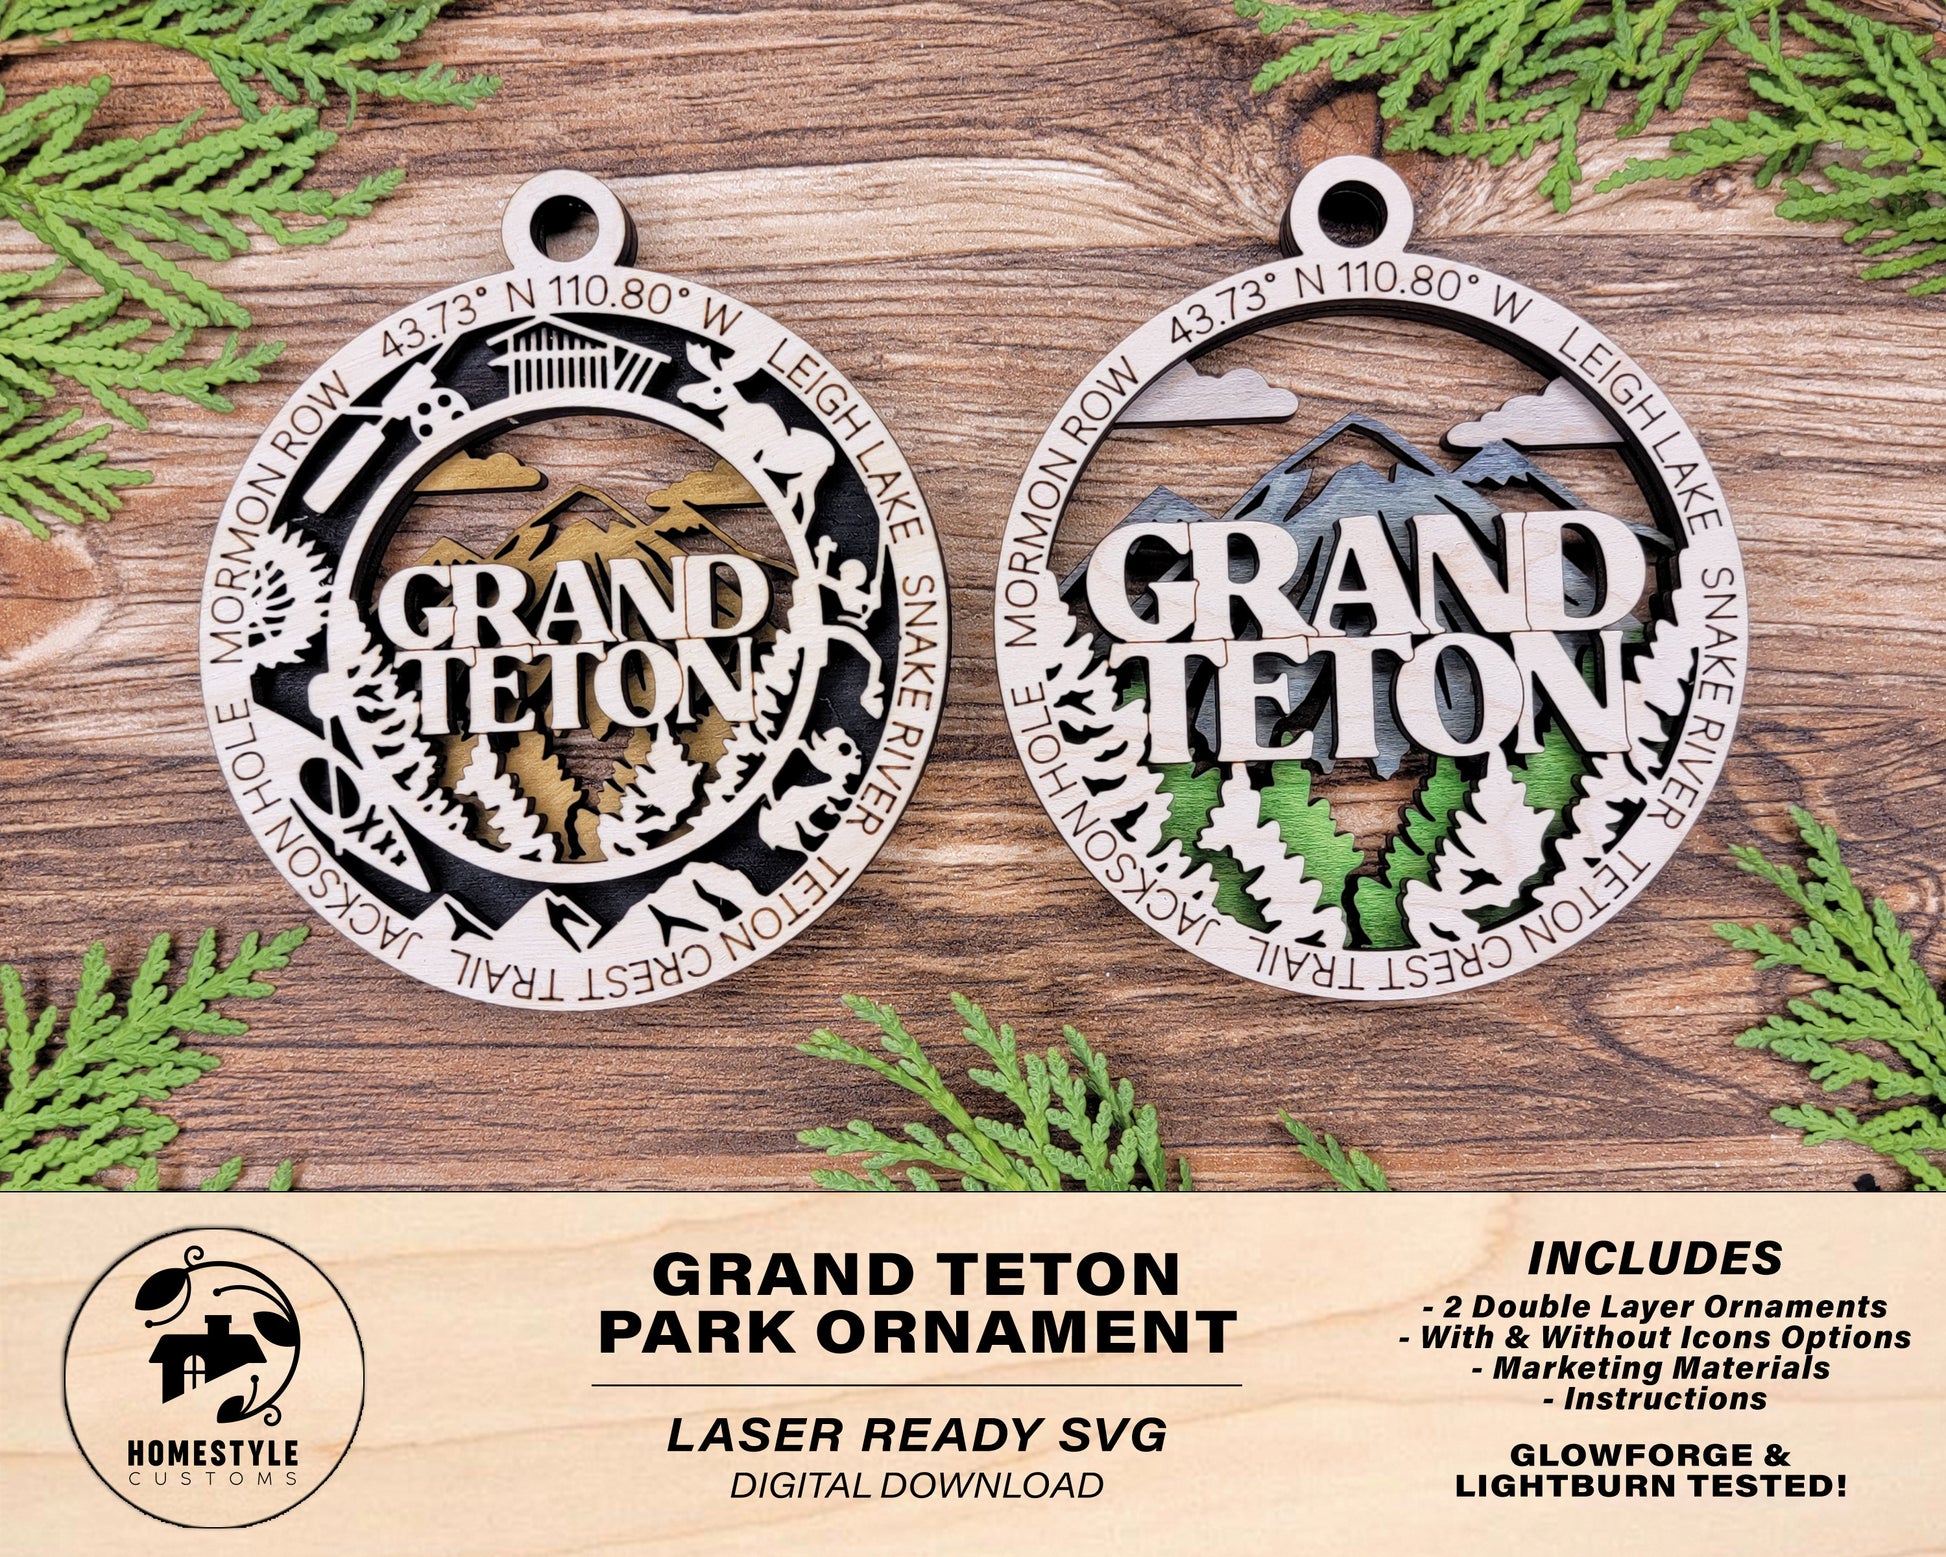 Grad Teton Park Ornament - Includes 2 Ornaments - Laser Design SVG, PDF, AI File Download - Tested On Glowforge and LightBurn